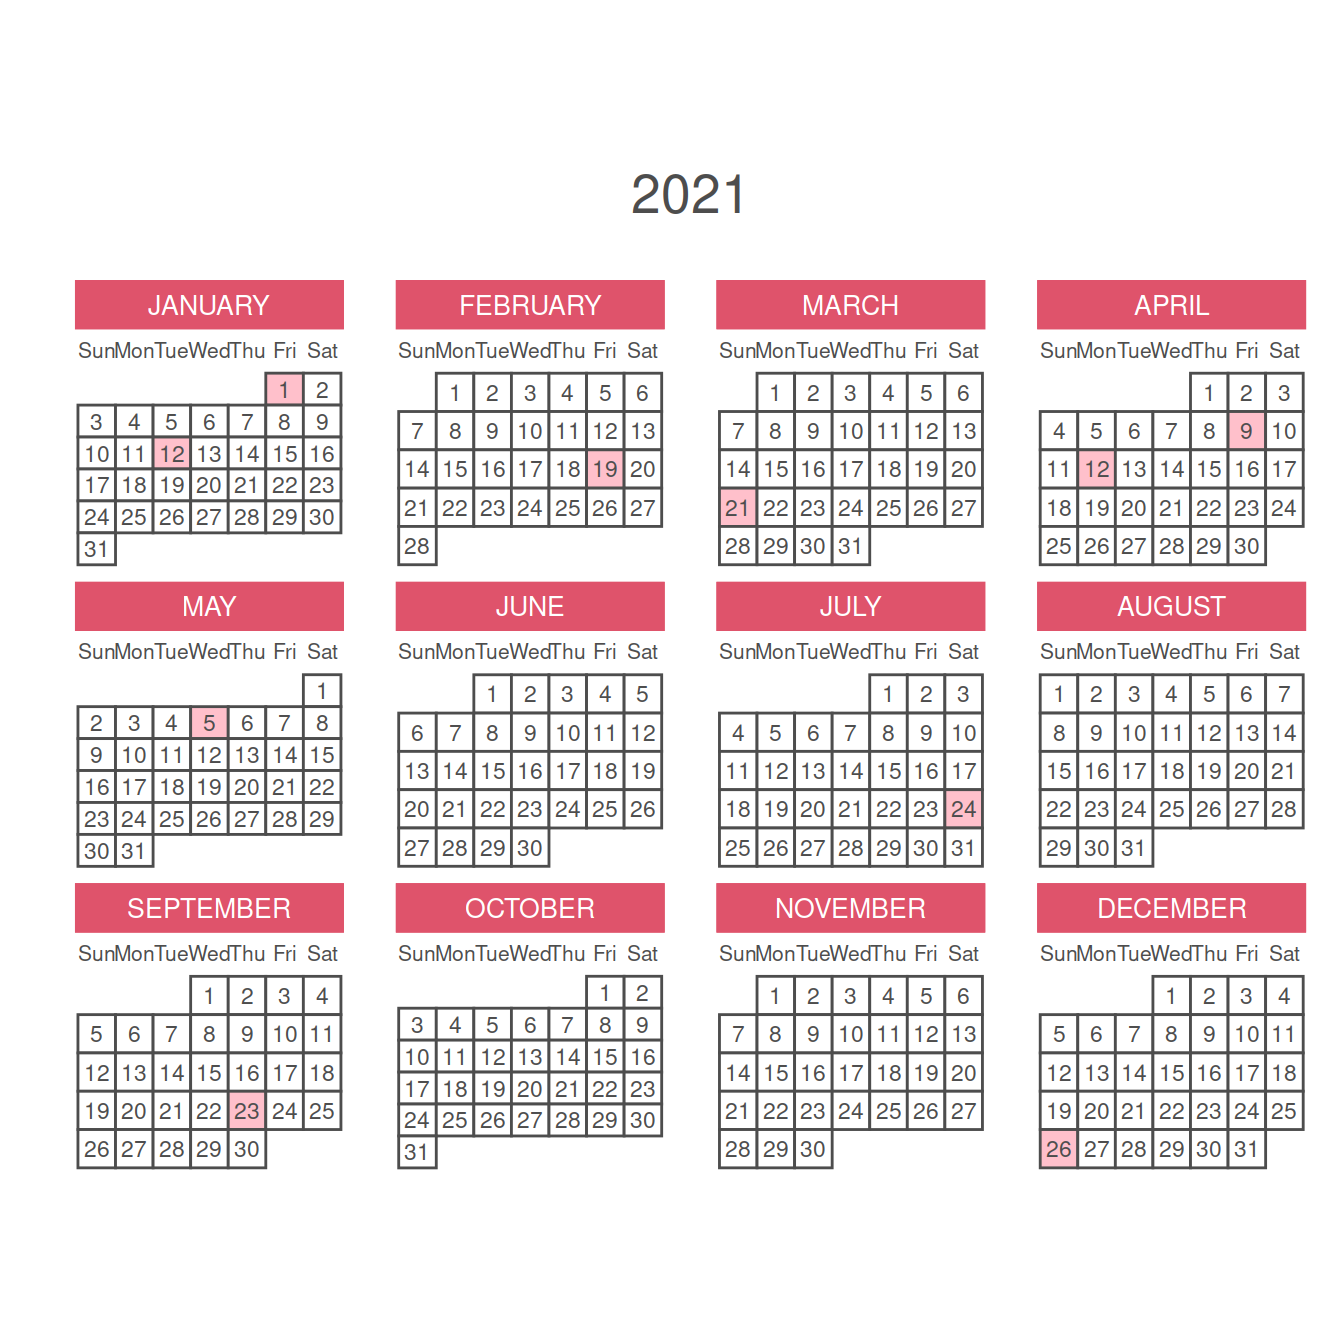 Yearly calendar in ggplot2